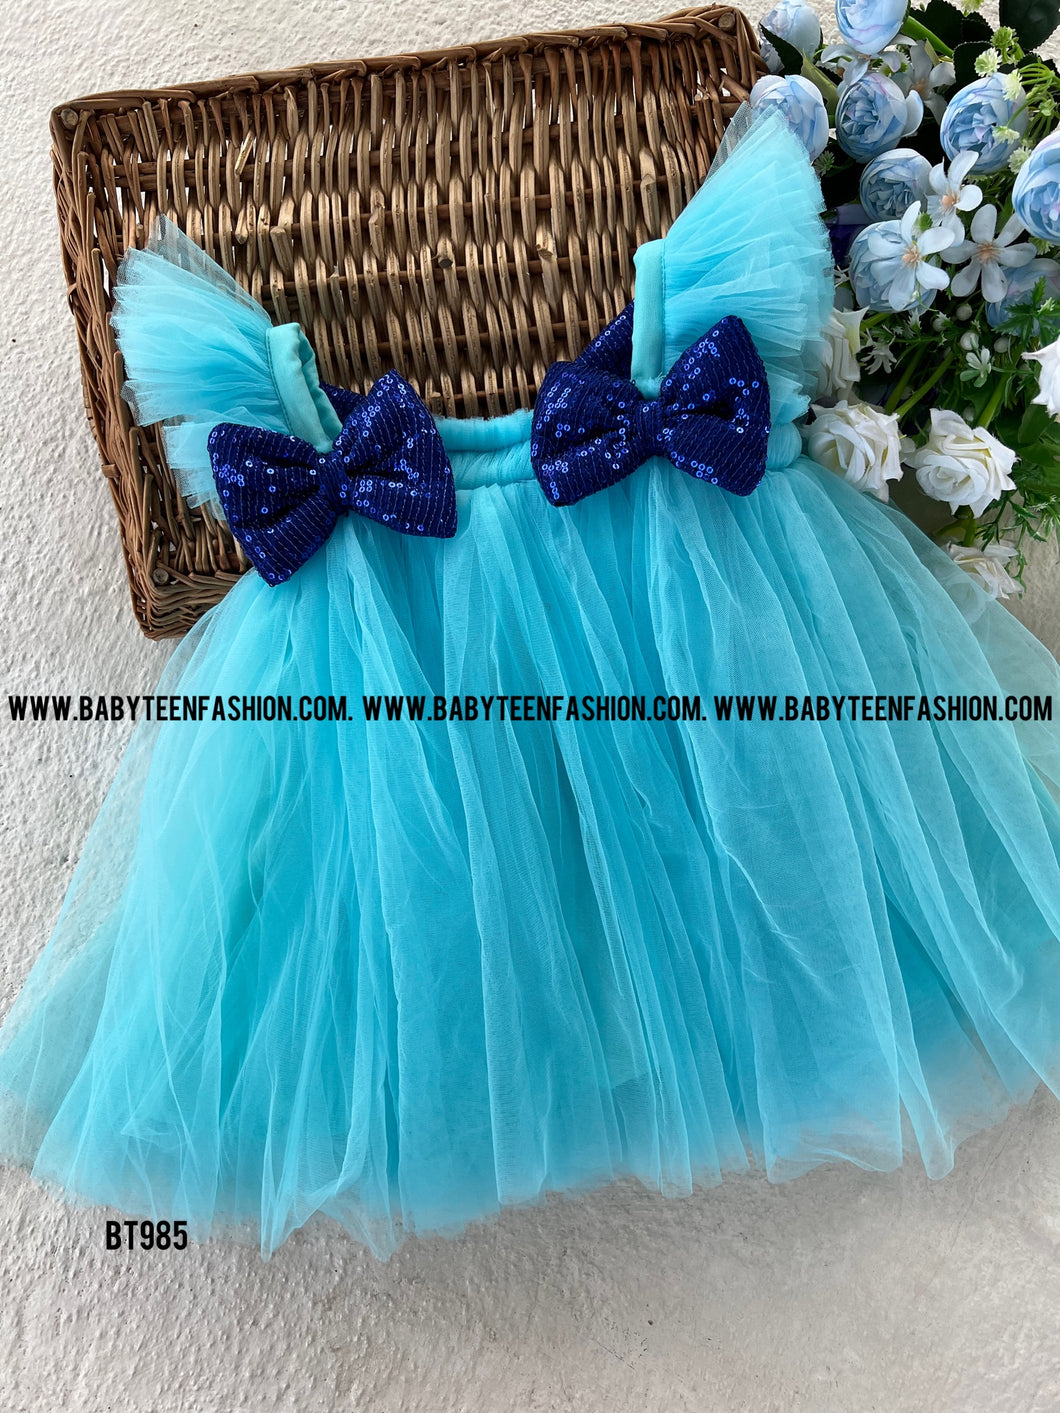 BT985 Enchanted Blue Princess Dress – Captivate the Celebration